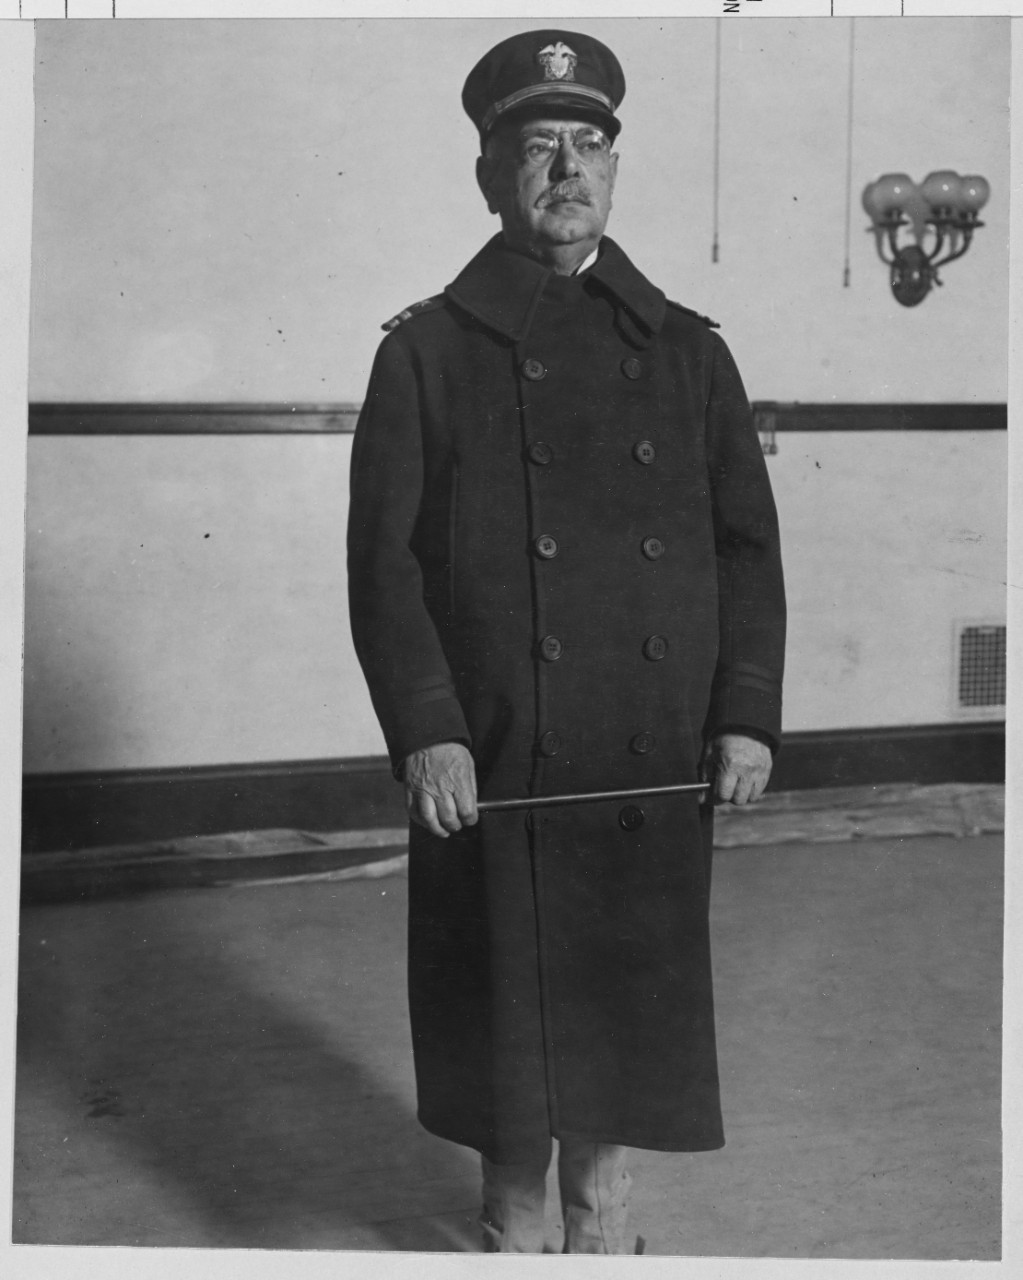 Lieutenant John Philip Sousa, USN